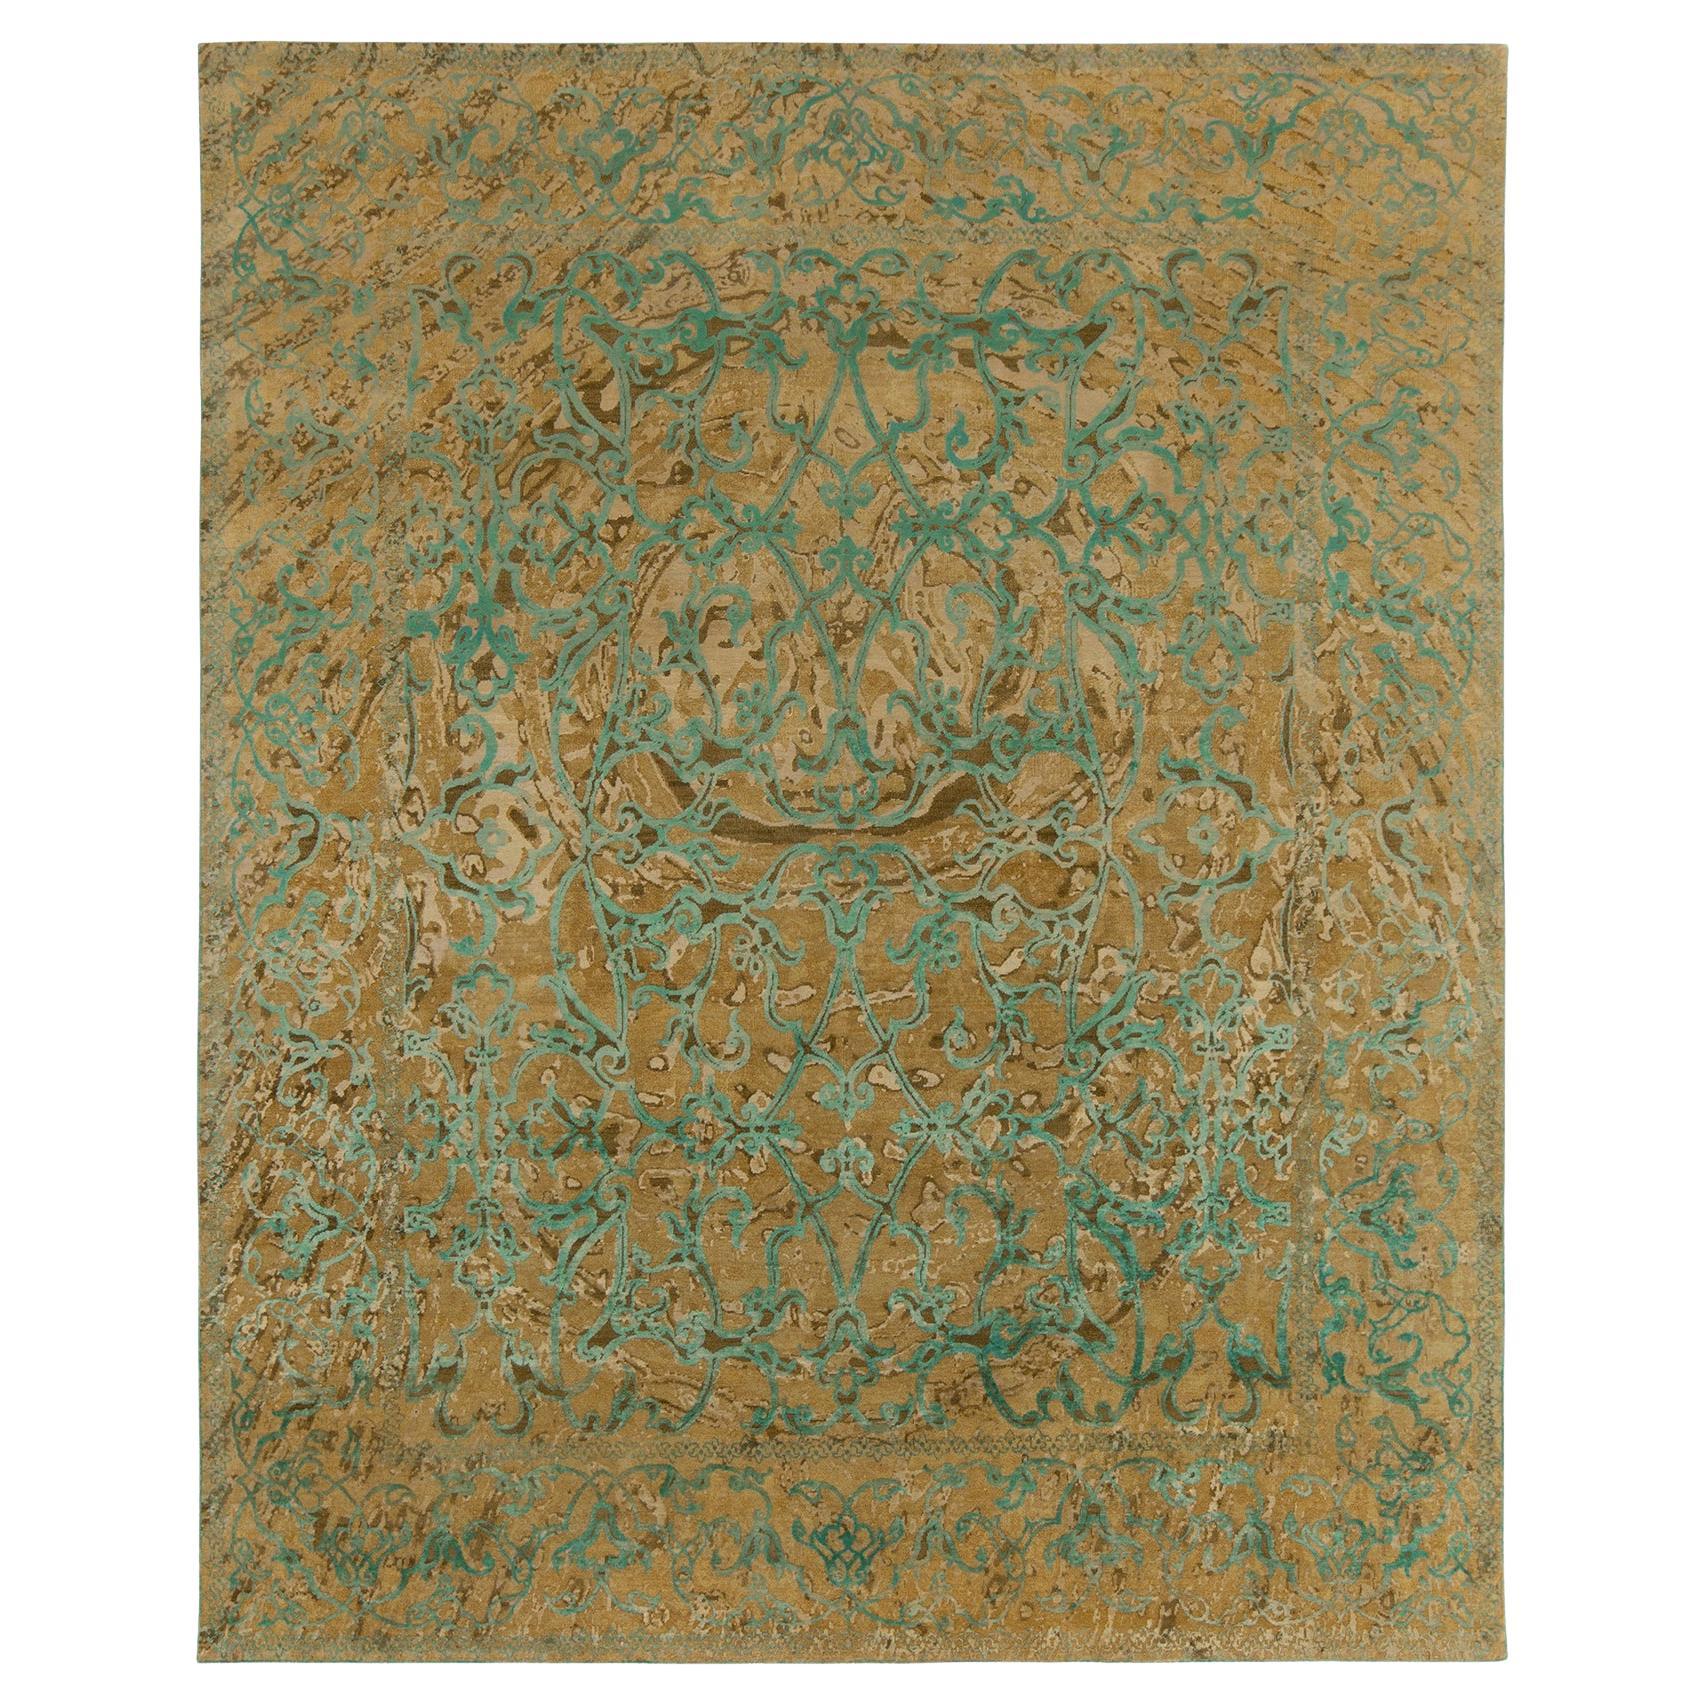 Rug & Kilim’s Modern rug in a Teal & Beige-Brown Abstract Geometric Pattern